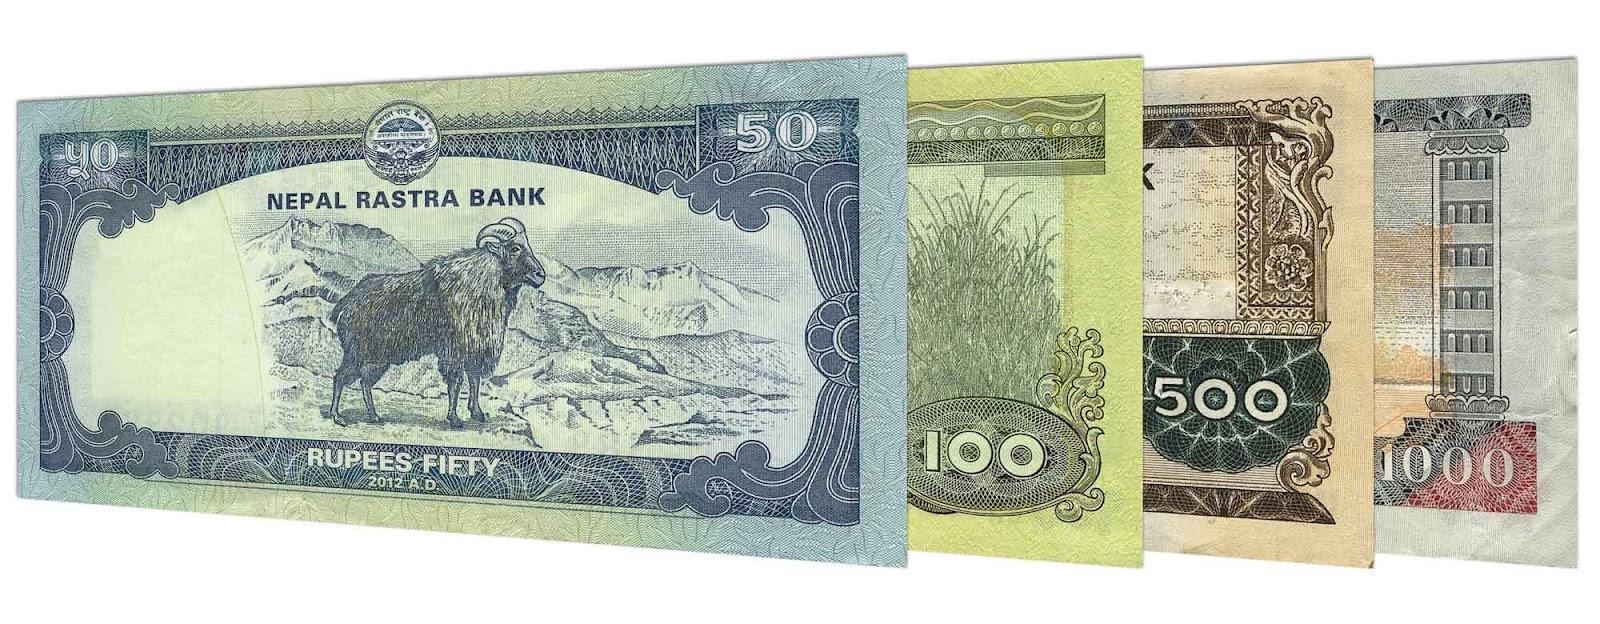 Nepalese rupees banknote series
